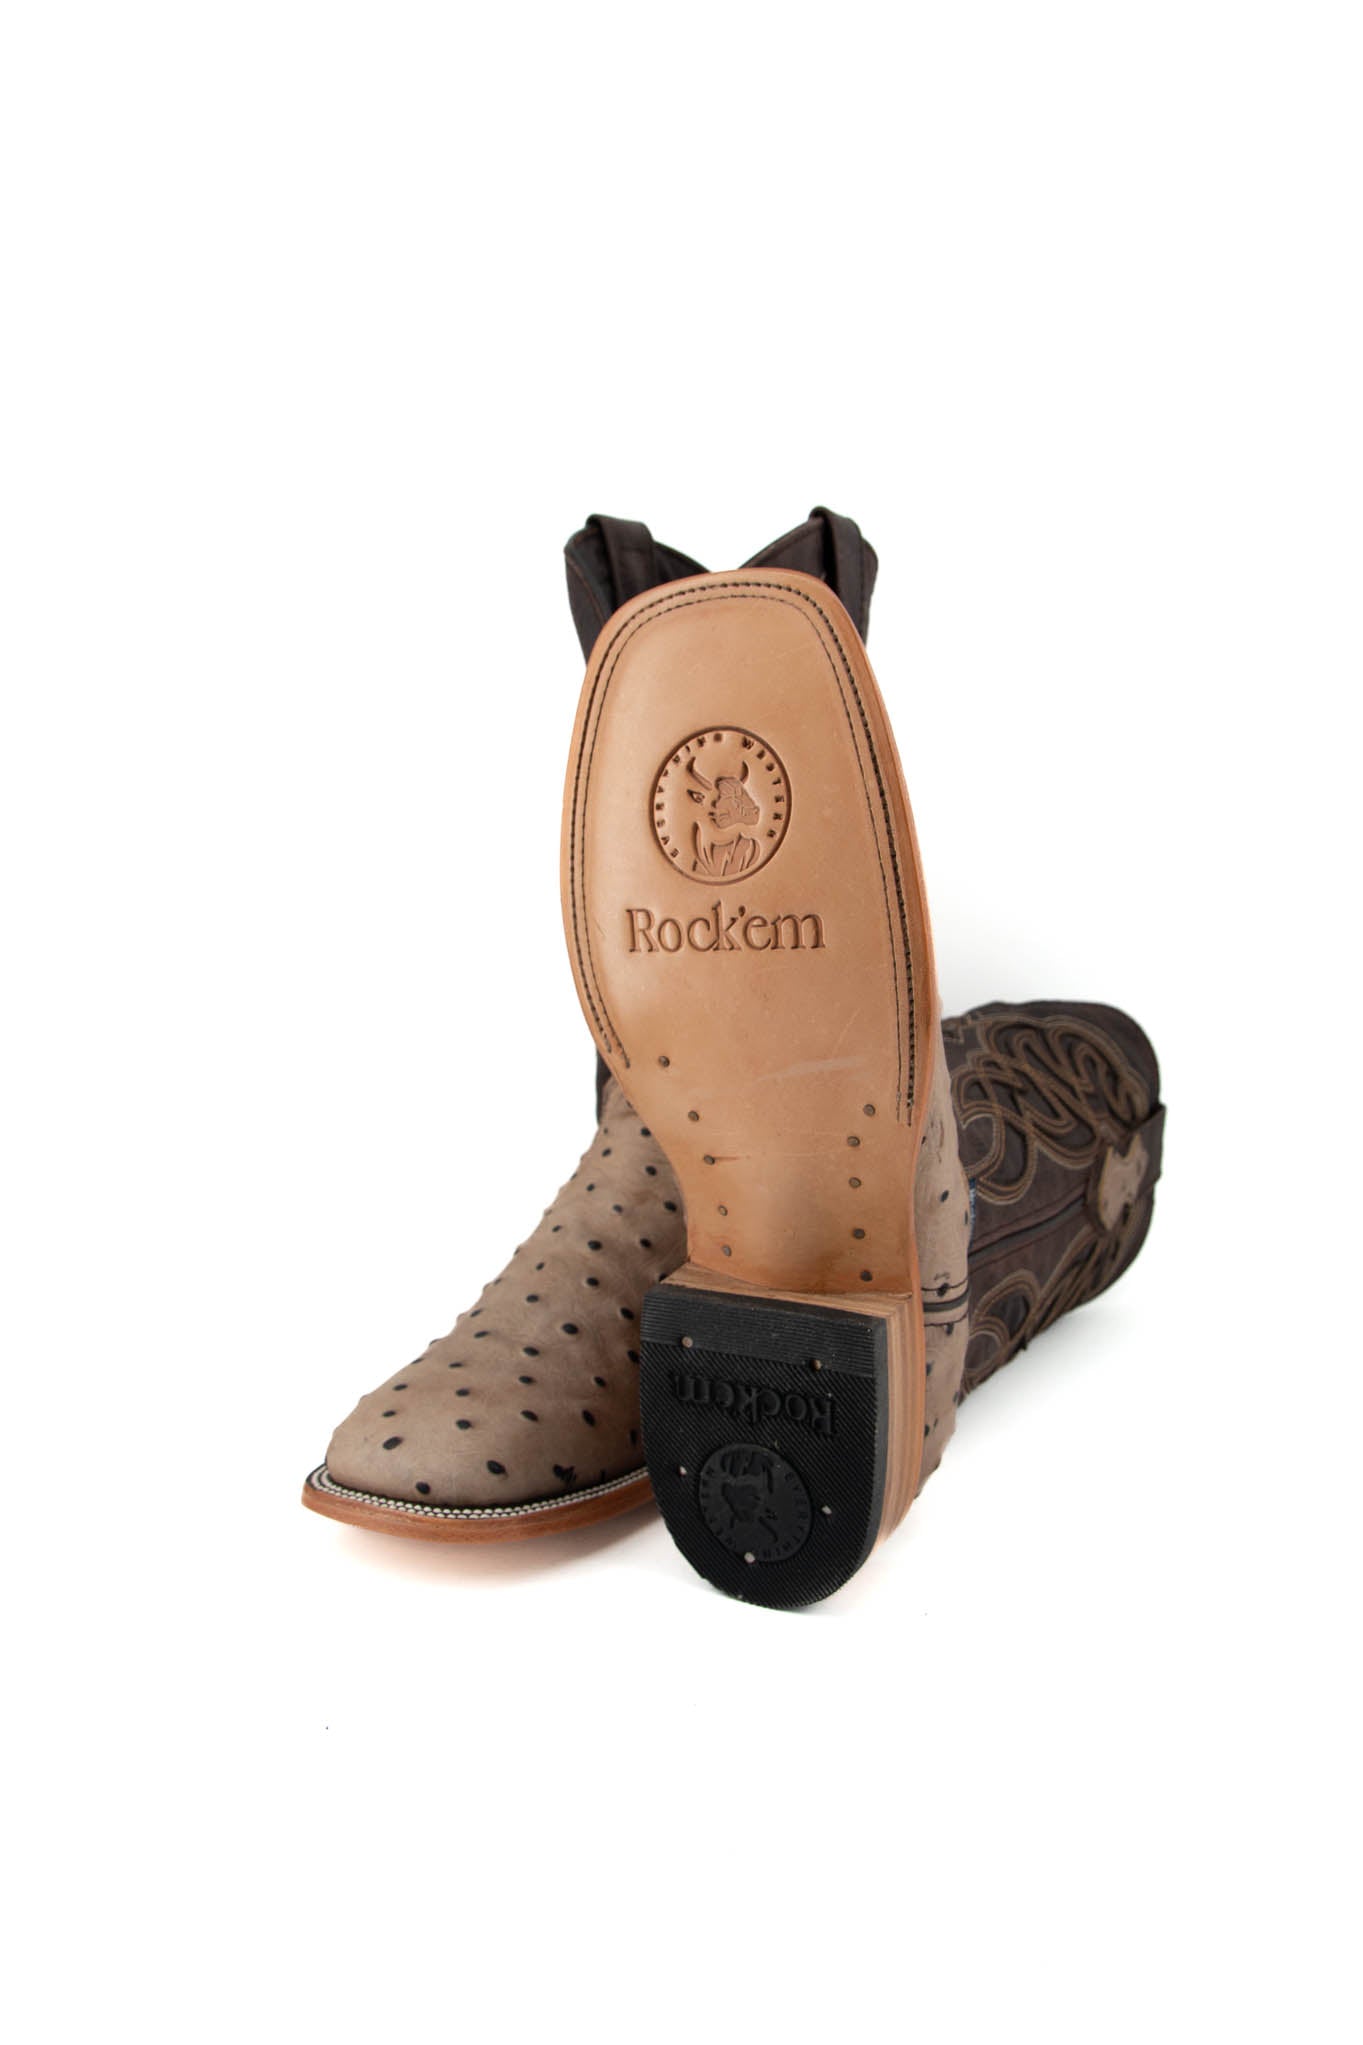 Avestruz Ranch Square Toe Cowboy Boot